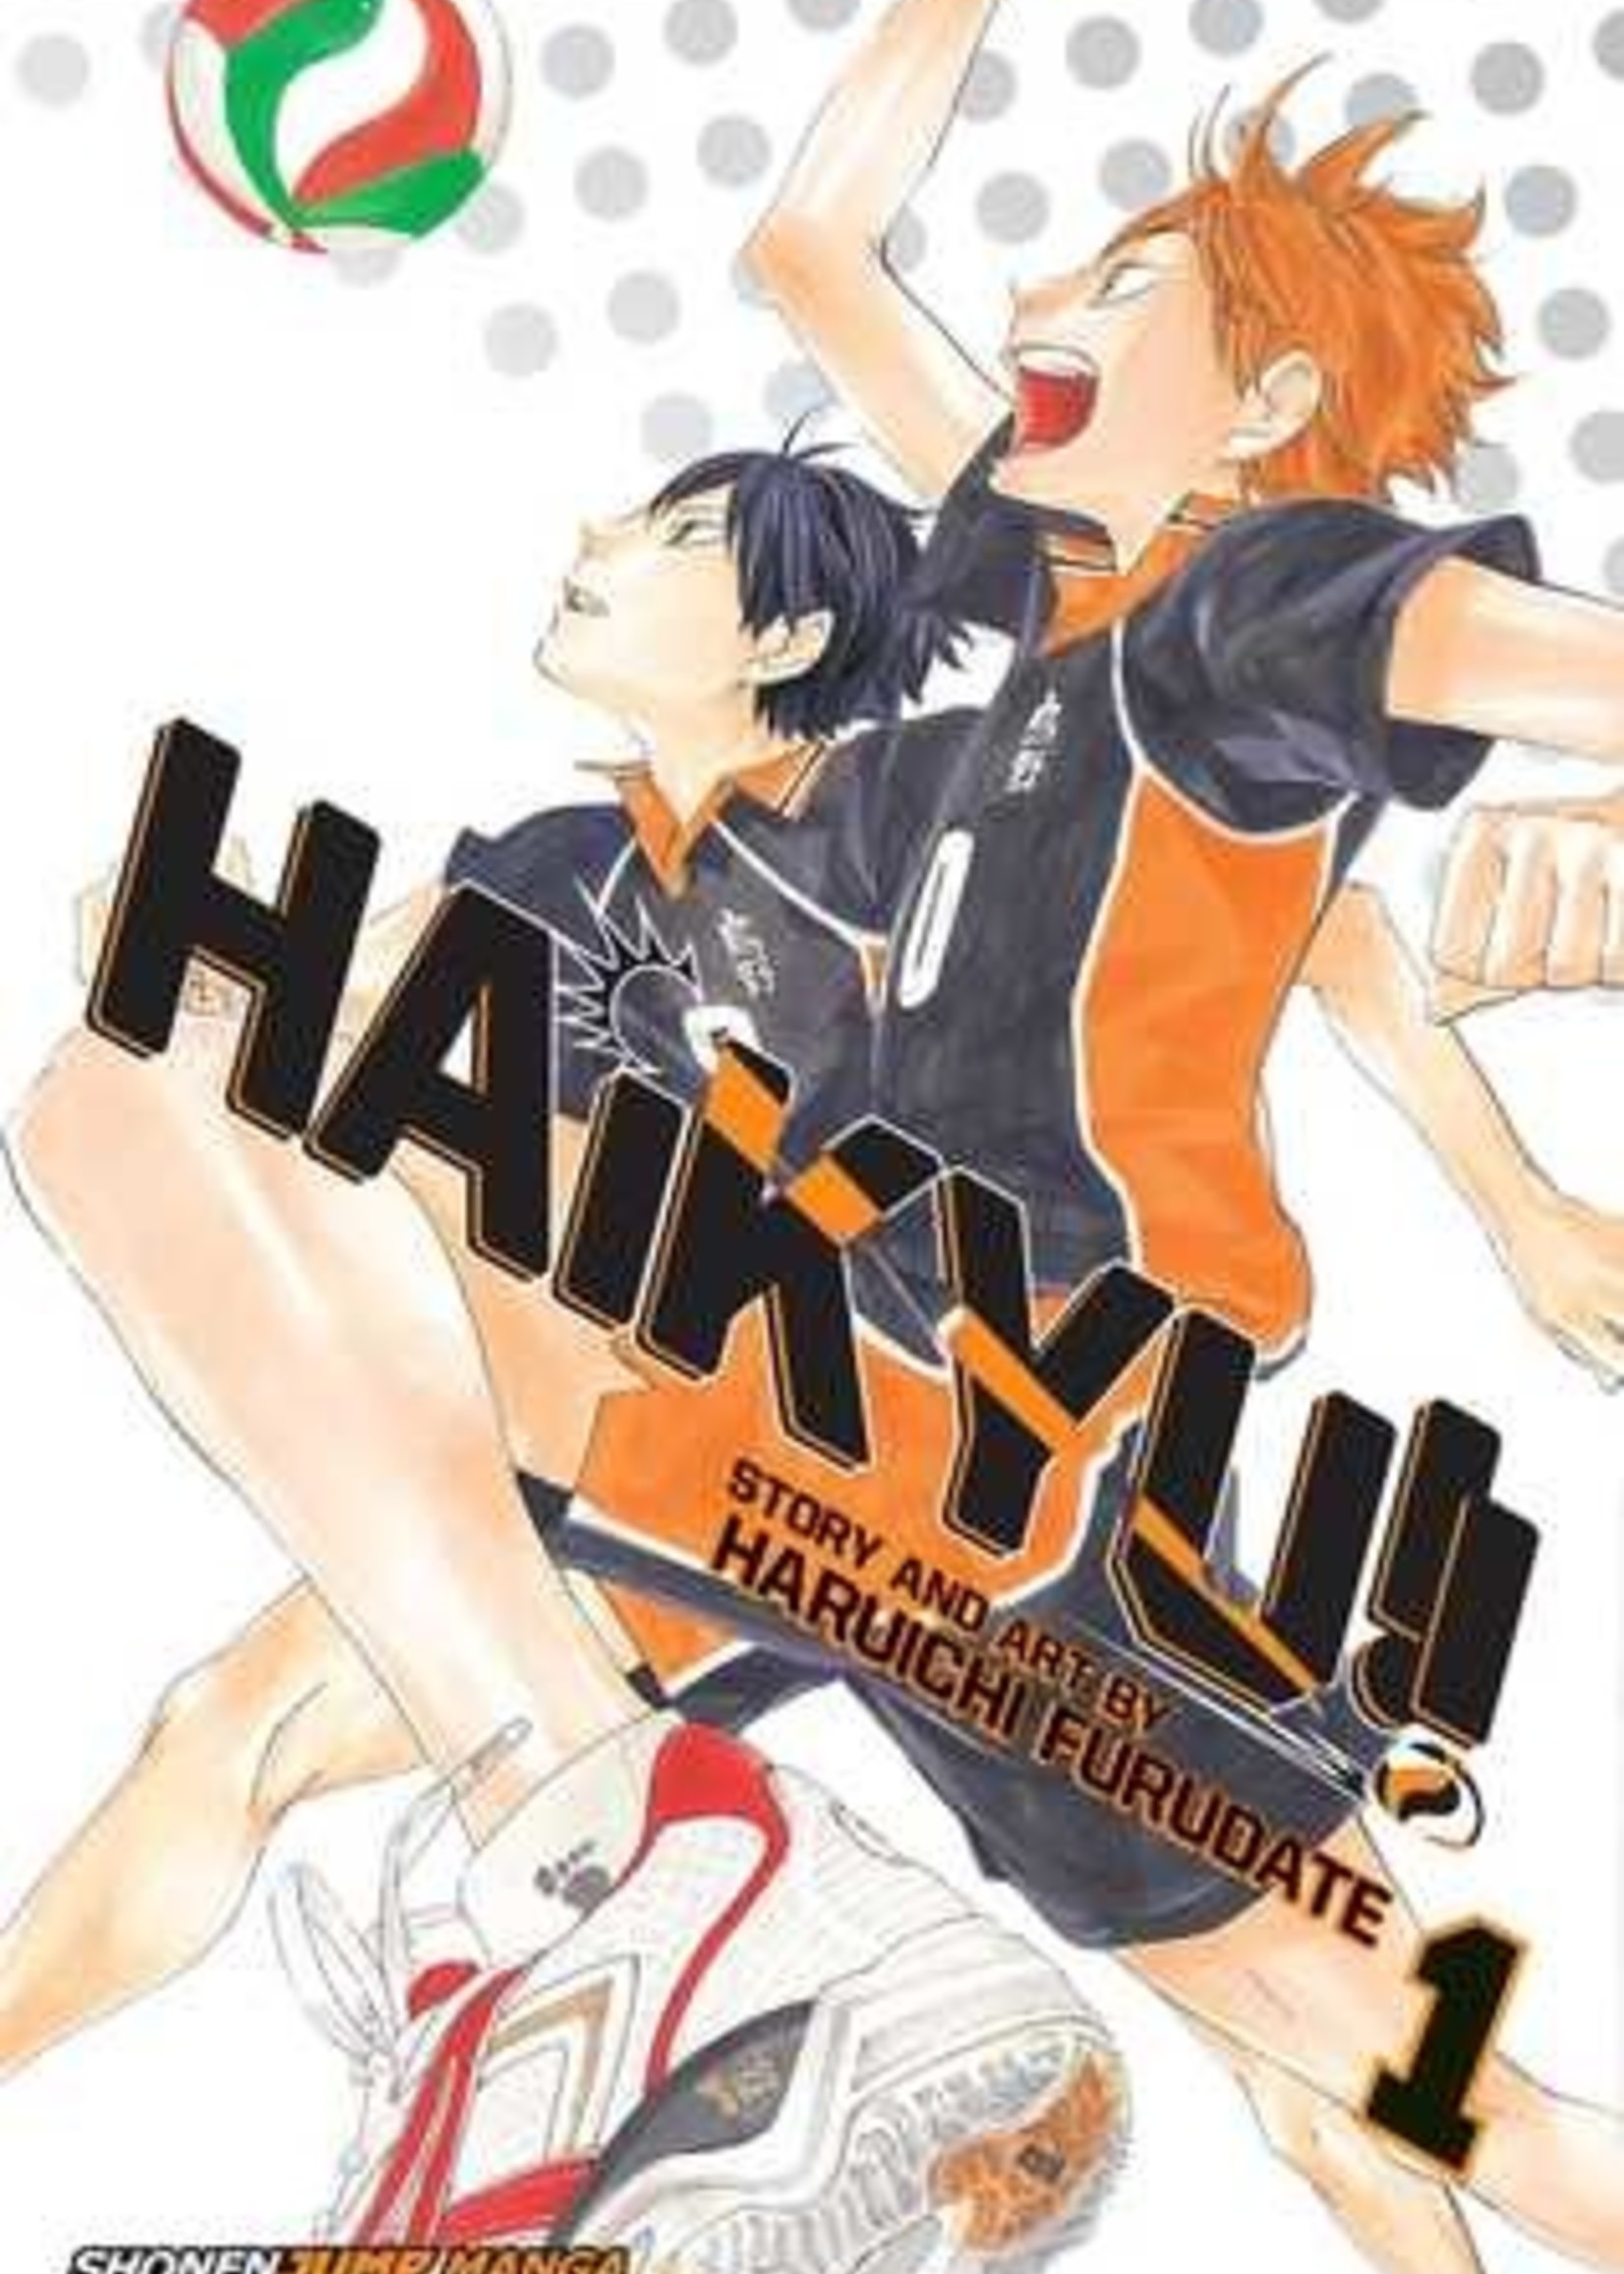 Haikyu!!, Vol. 1 by Haruichi Furudate